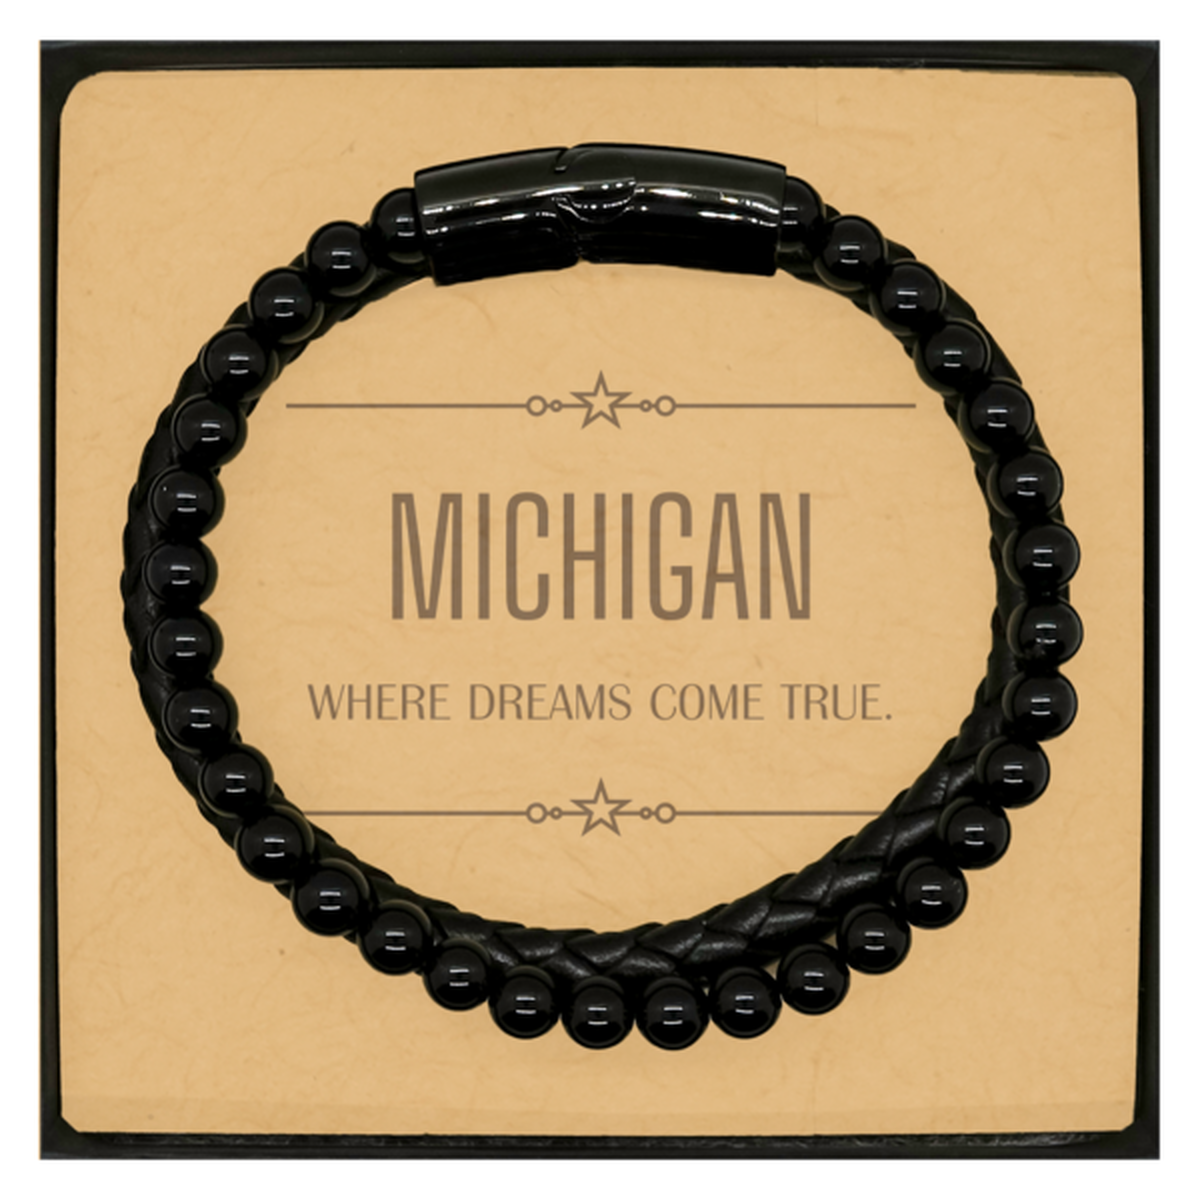 Love Michigan State Stone Leather Bracelets, Michigan Where dreams come true, Birthday Christmas Inspirational Gifts For Michigan Men, Women, Friends